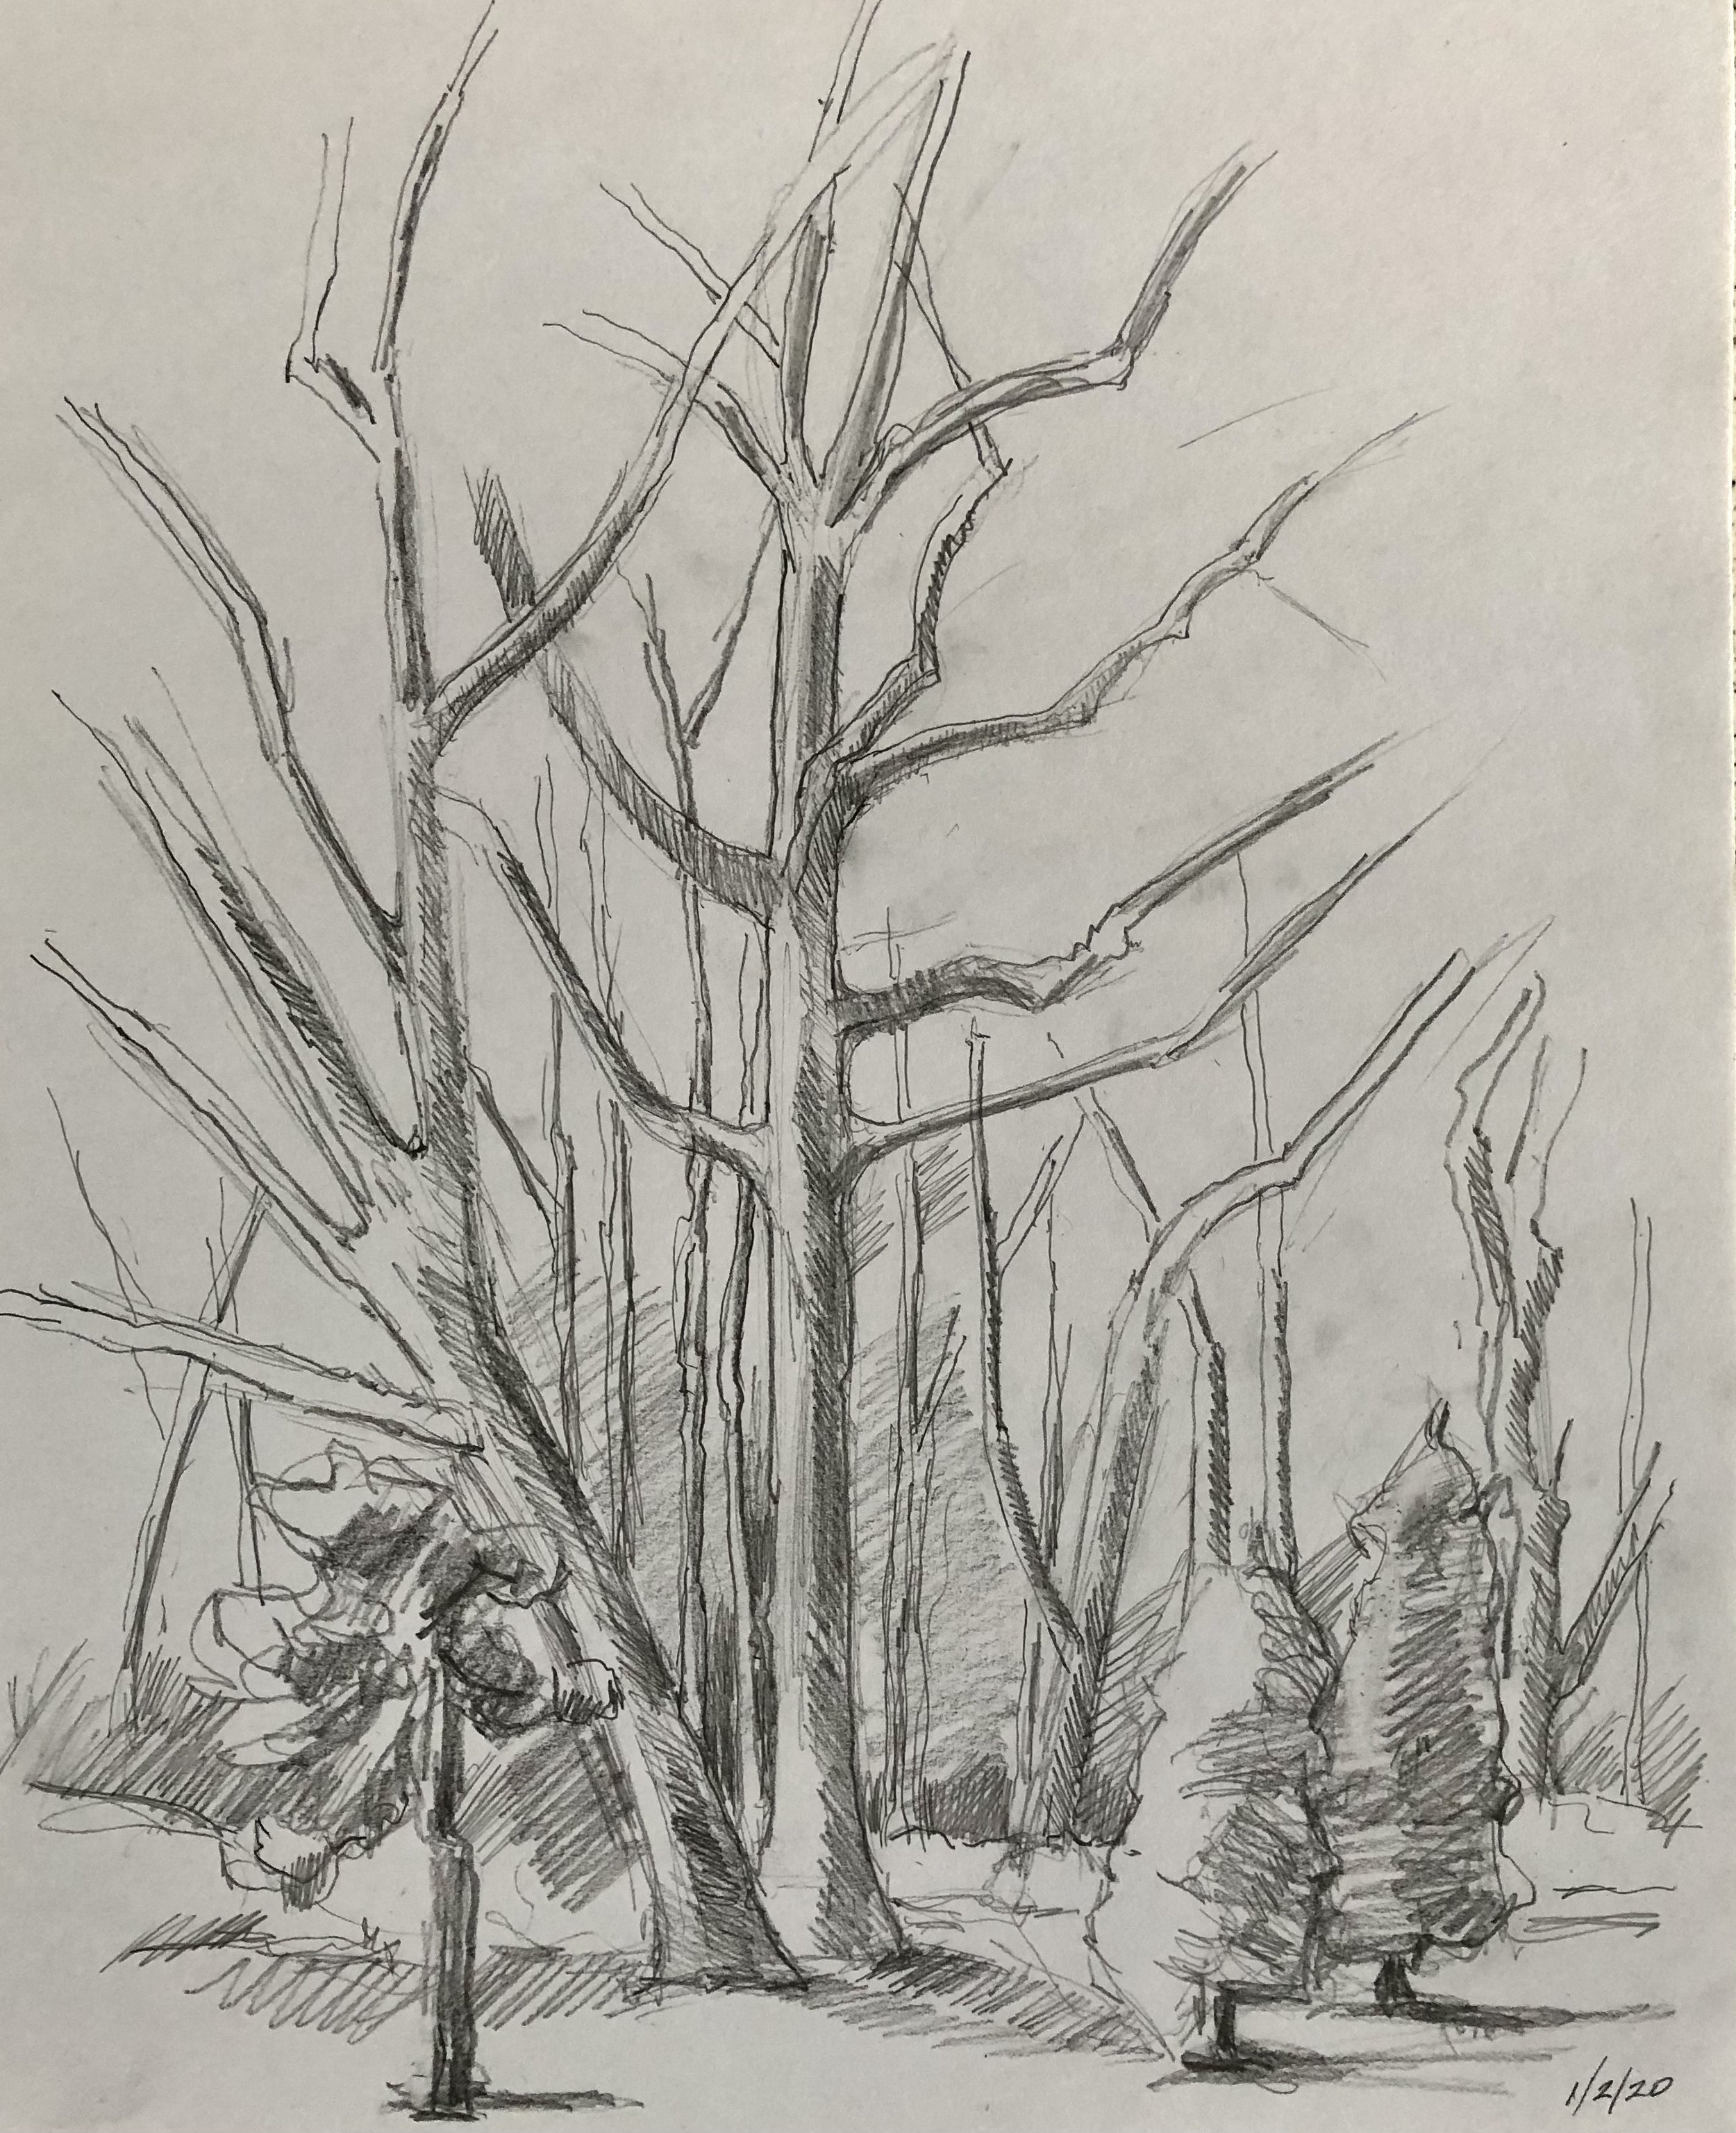    Backyard Trees,   graphite, 24 x 19 in, 2020 